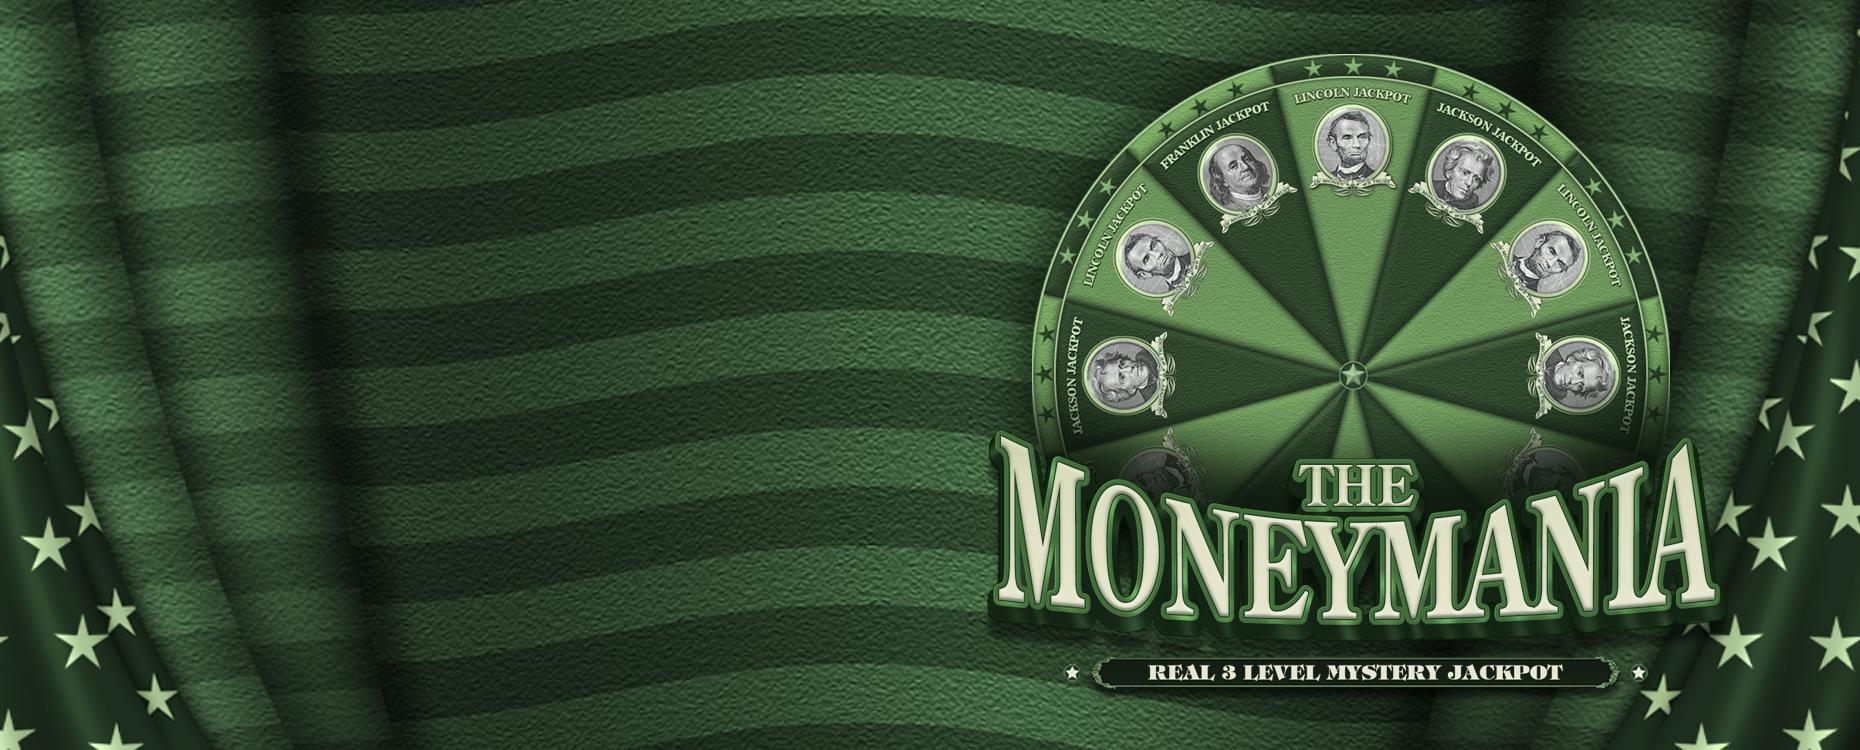 The Moneymania | Promotion pack | Online slot